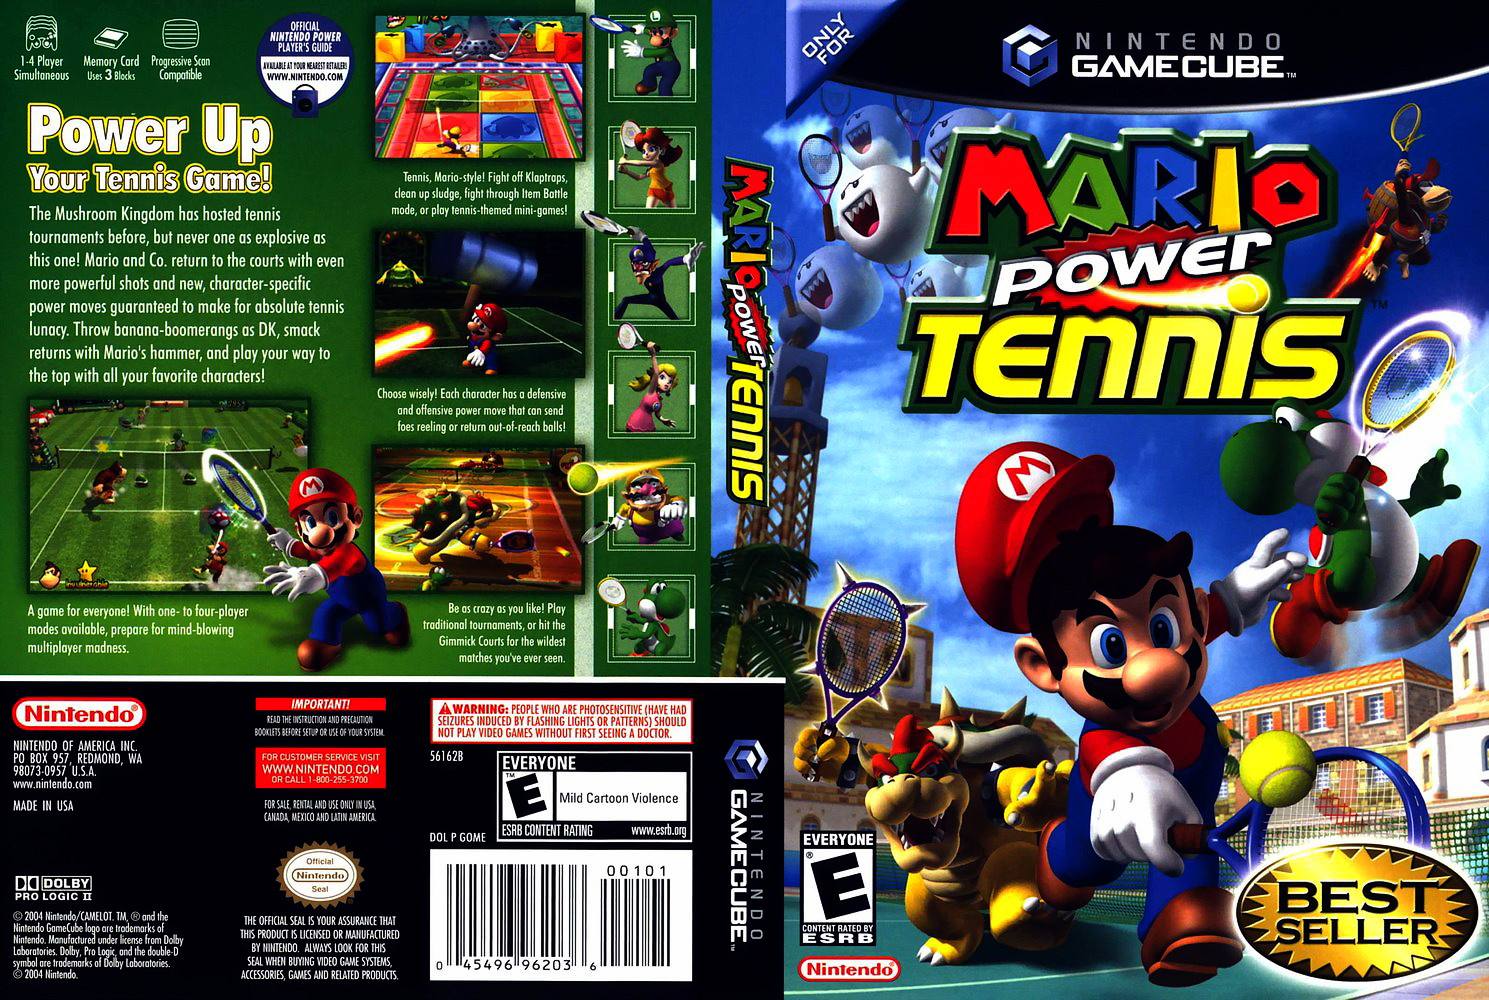 Mario Power Tennis #27